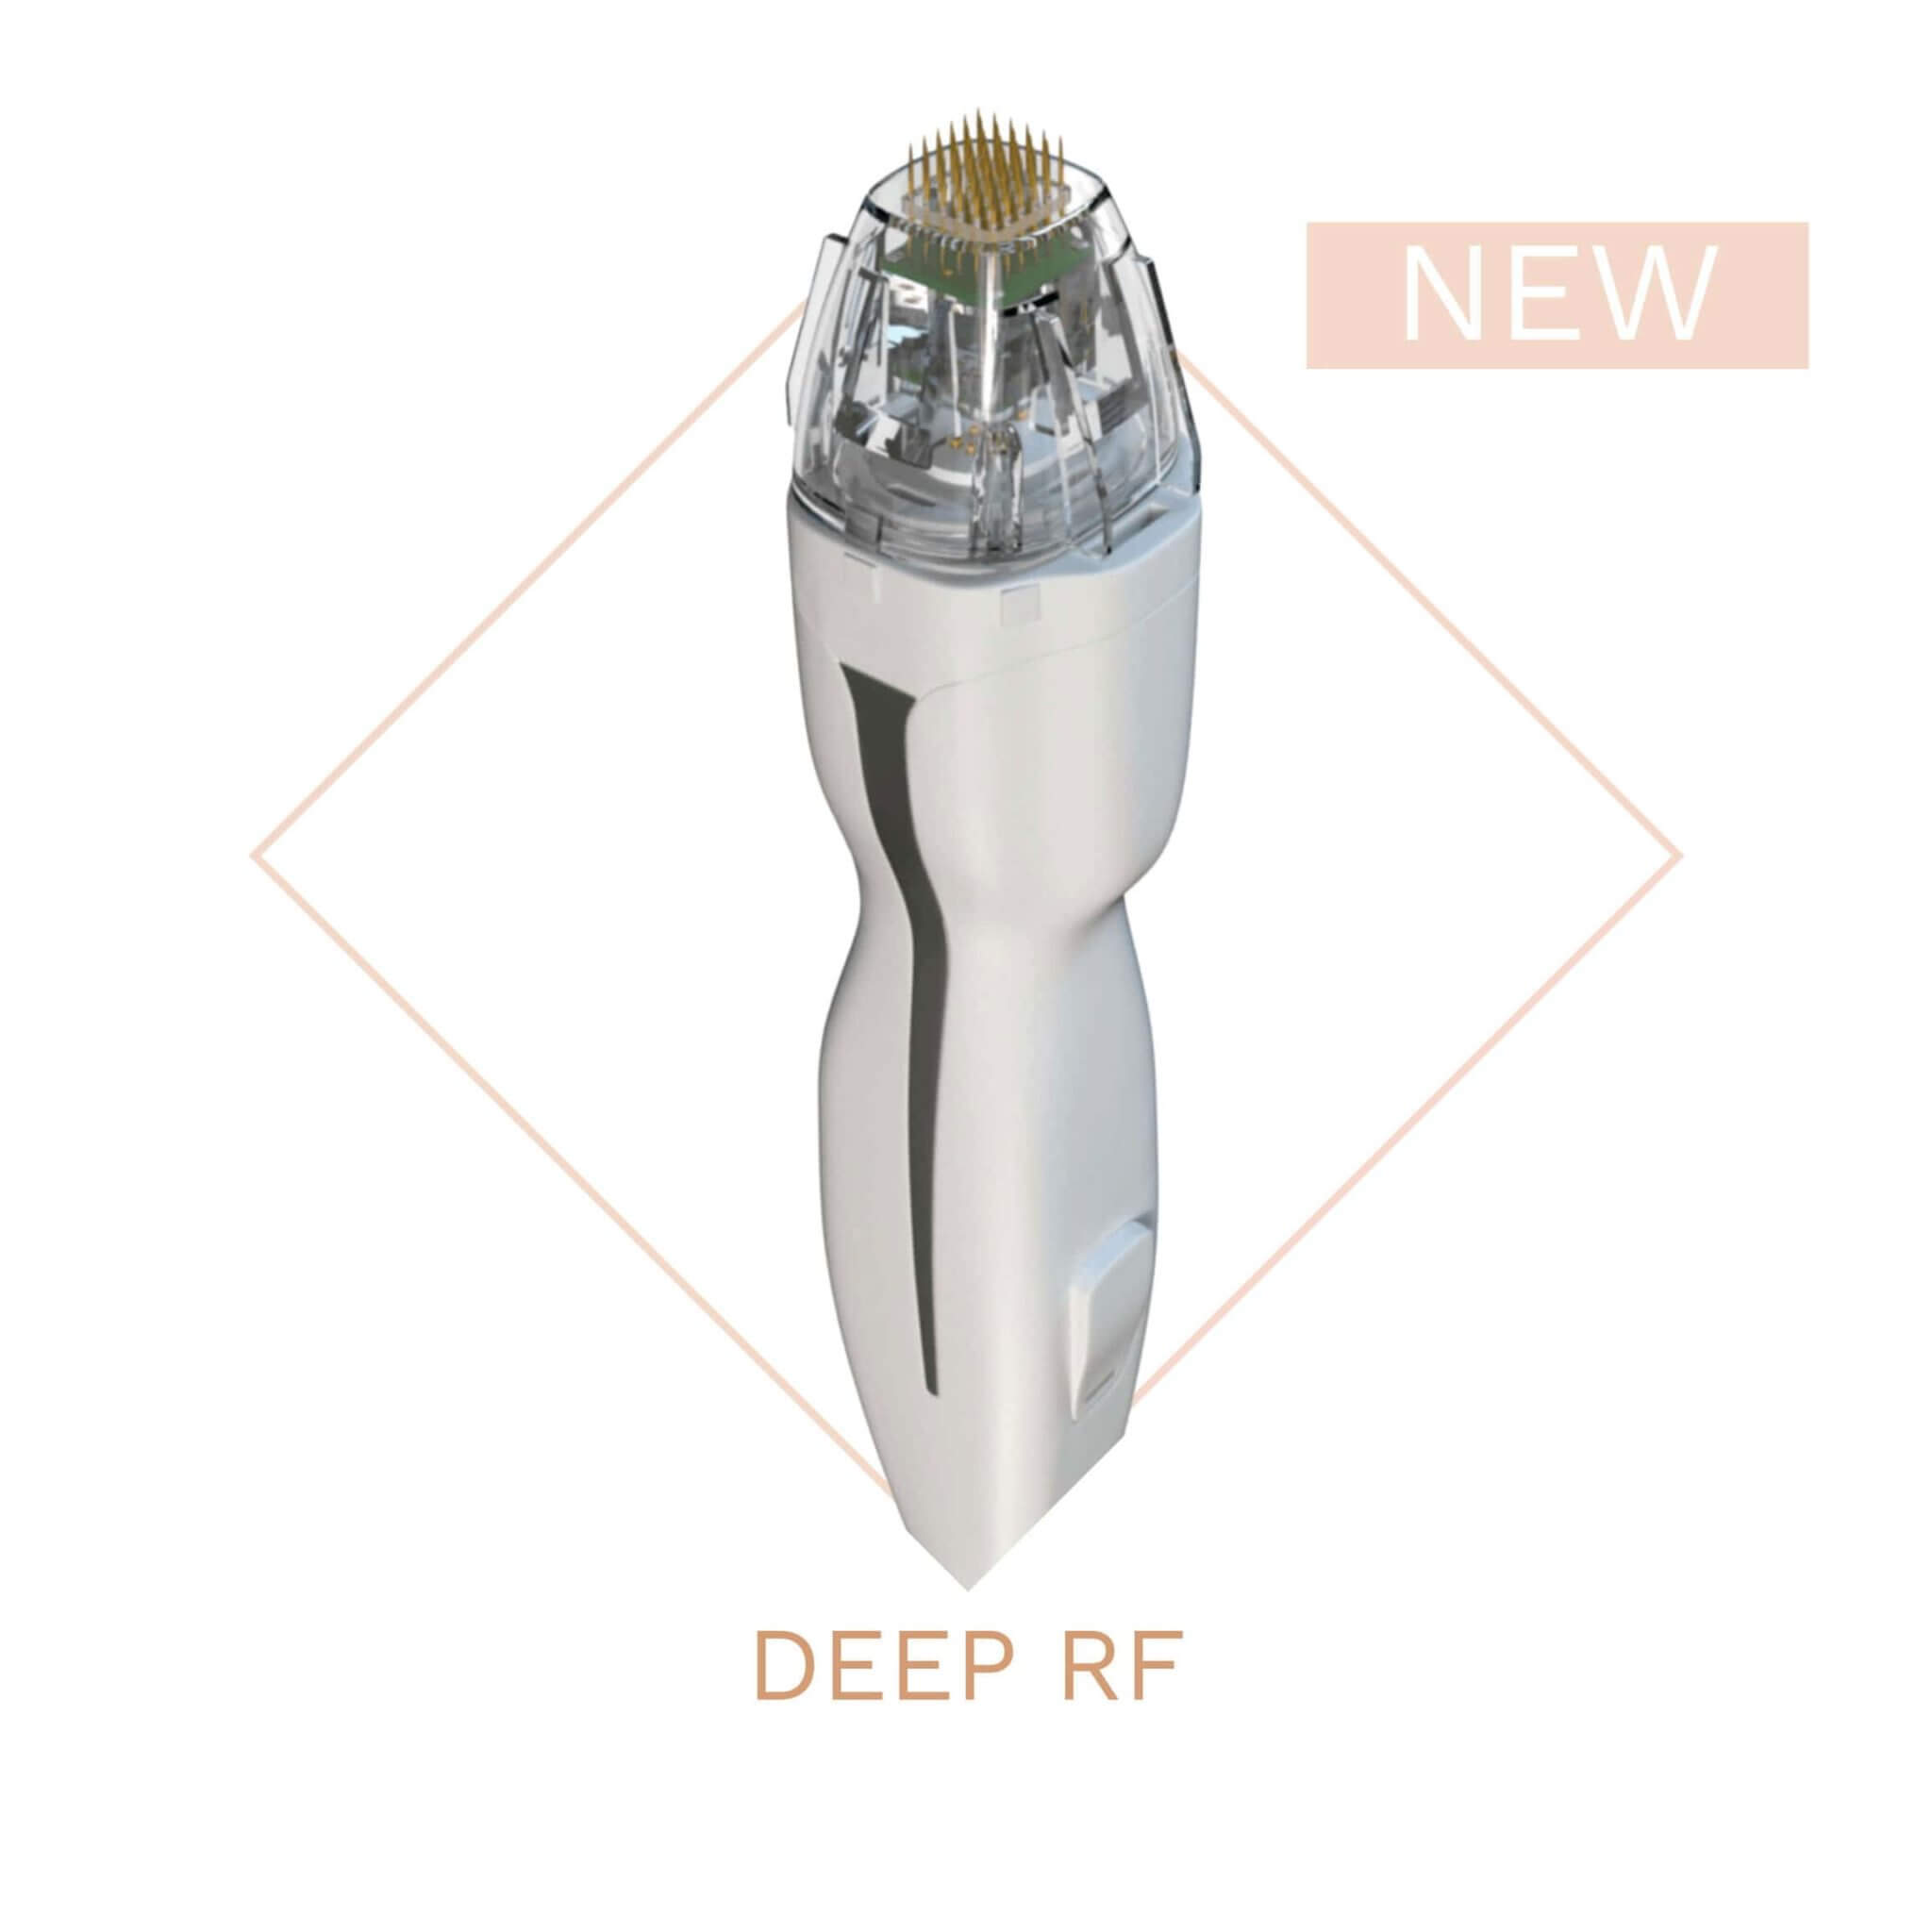 Deep RF - Virtue RF Microneedling hand piece for Body rejuvenation